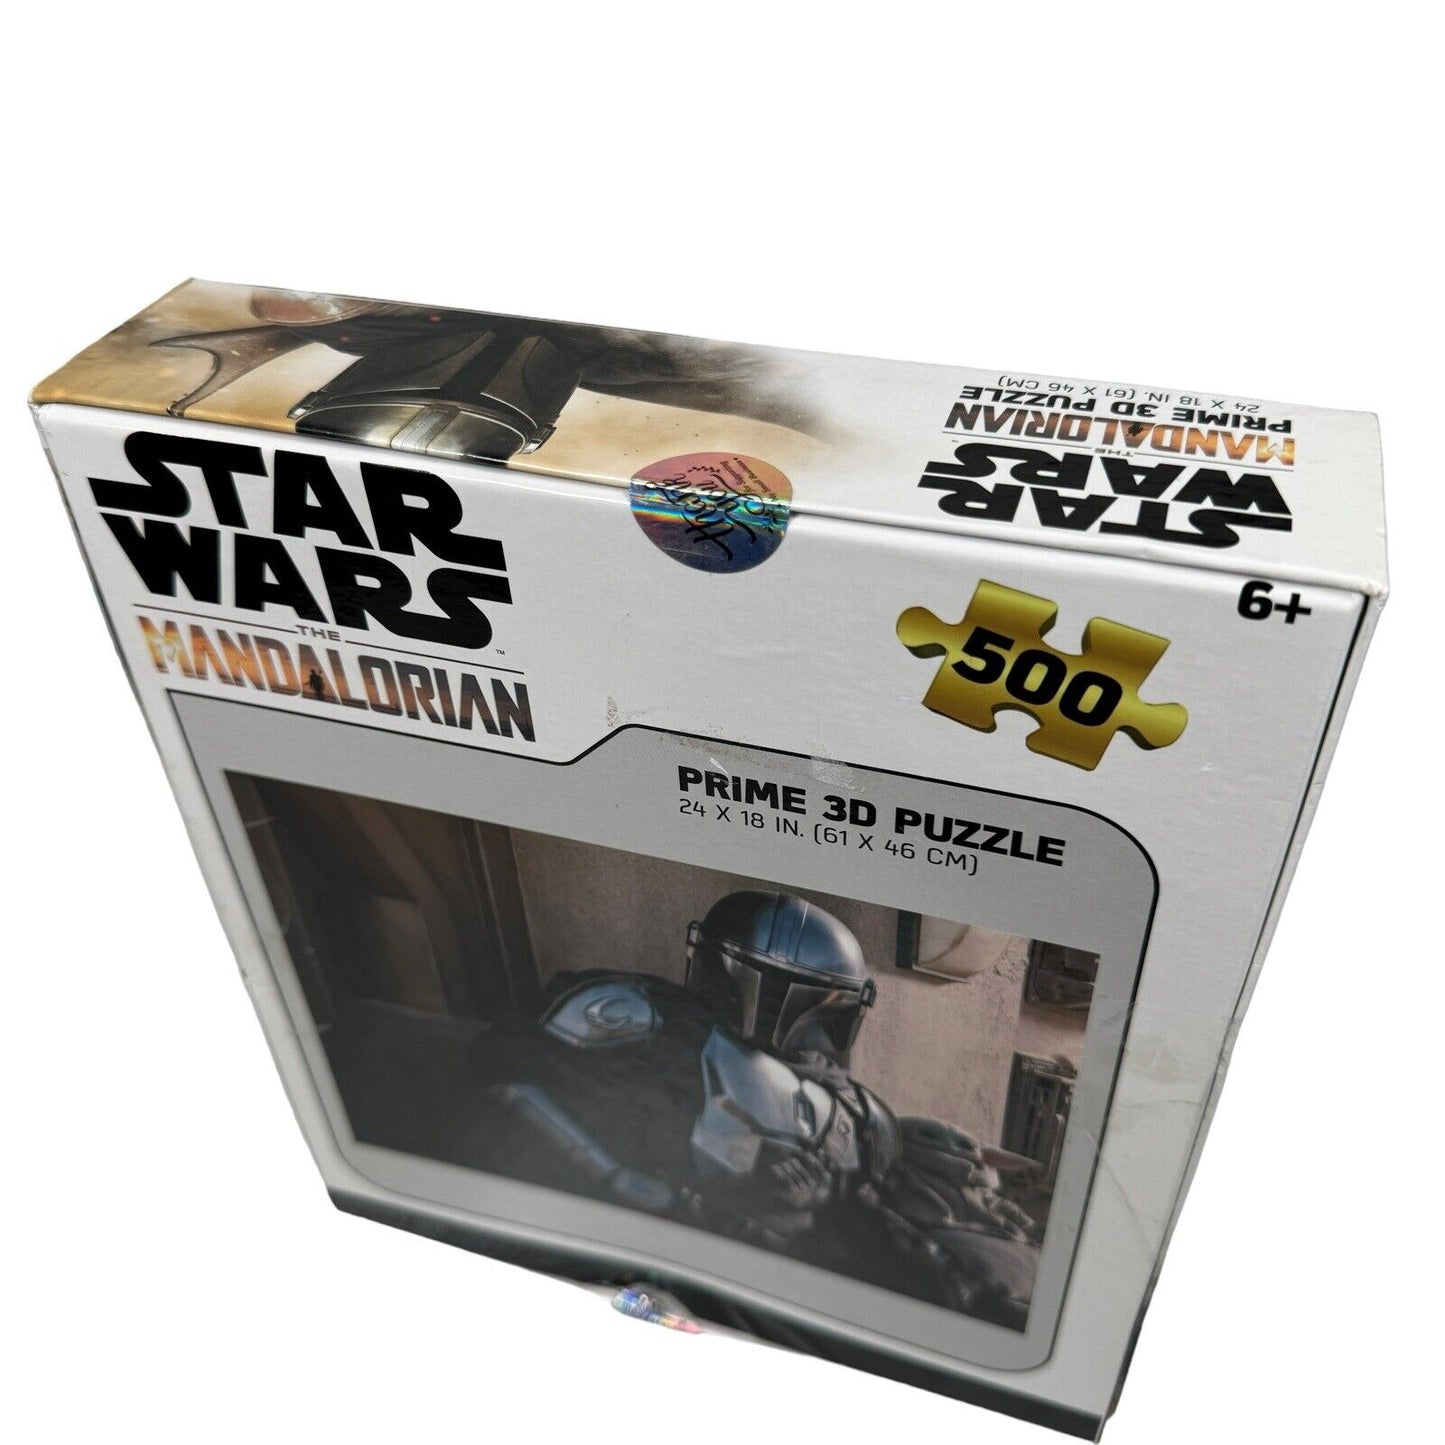 Disney Star Wars Prime 3D Puzzle The Mandalorian 500 PC 24 x 18 in Baby Yoda